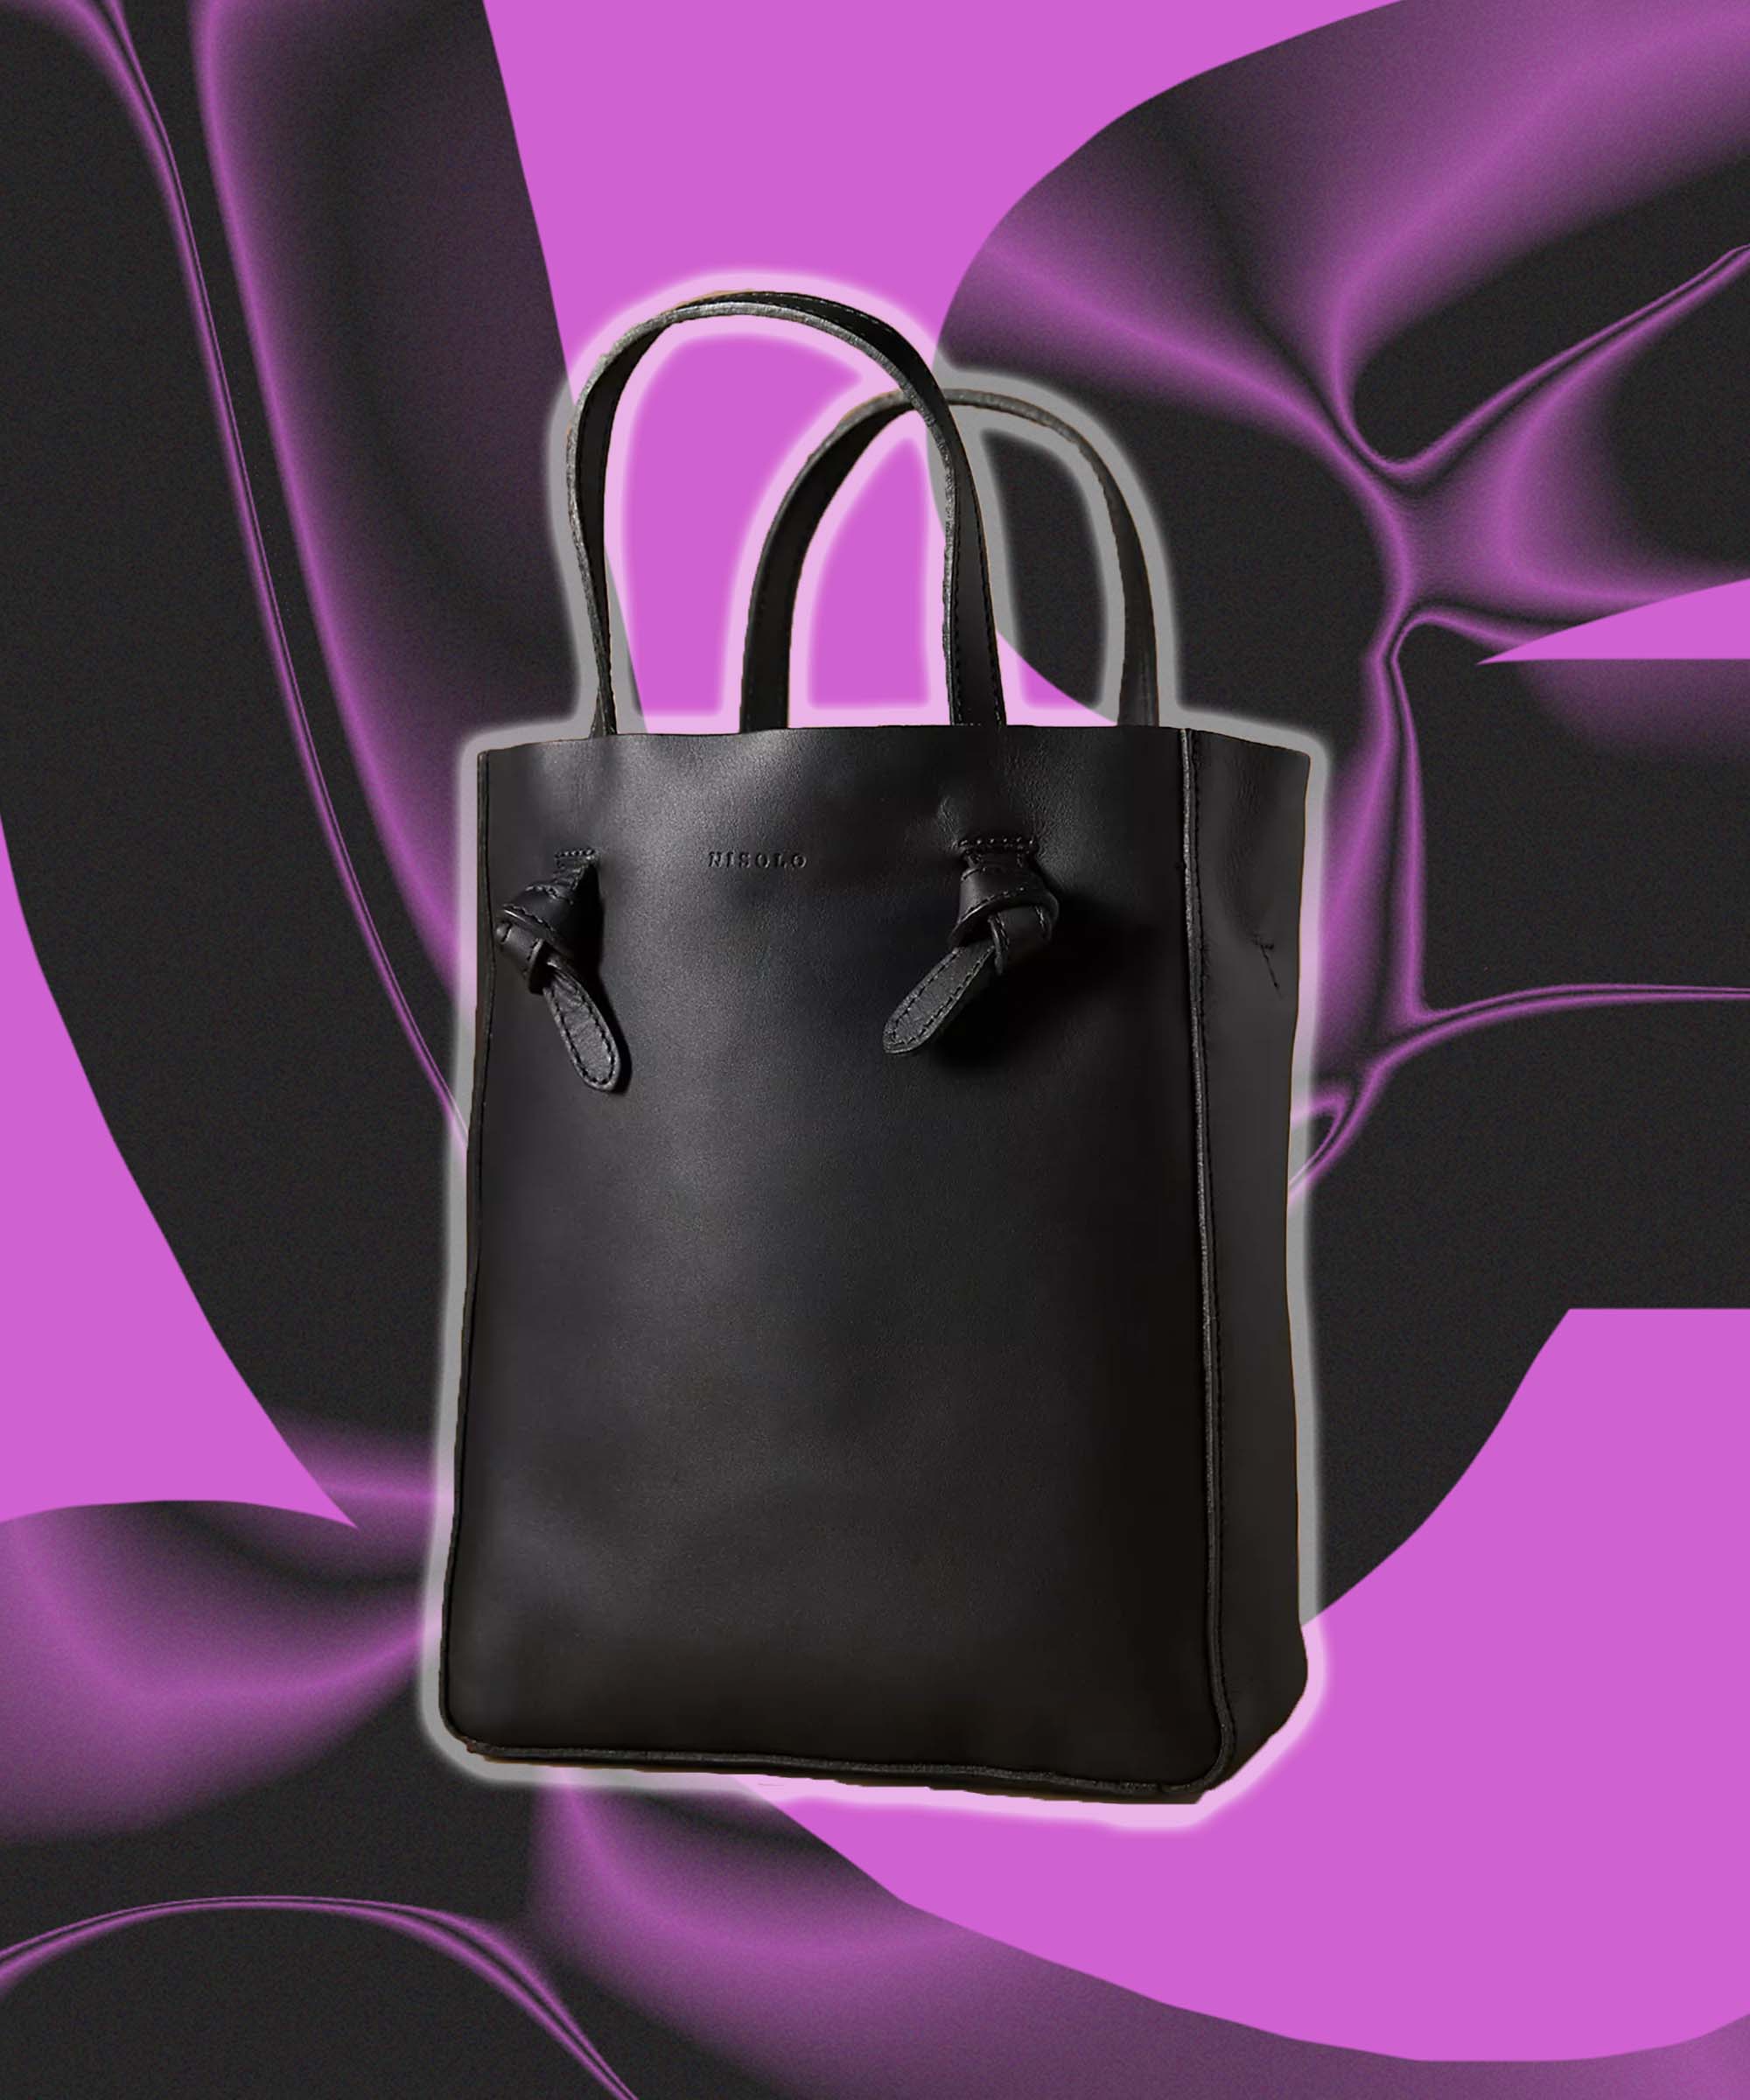 TikTok Users Love This Best-Selling Tote Bag Organizer